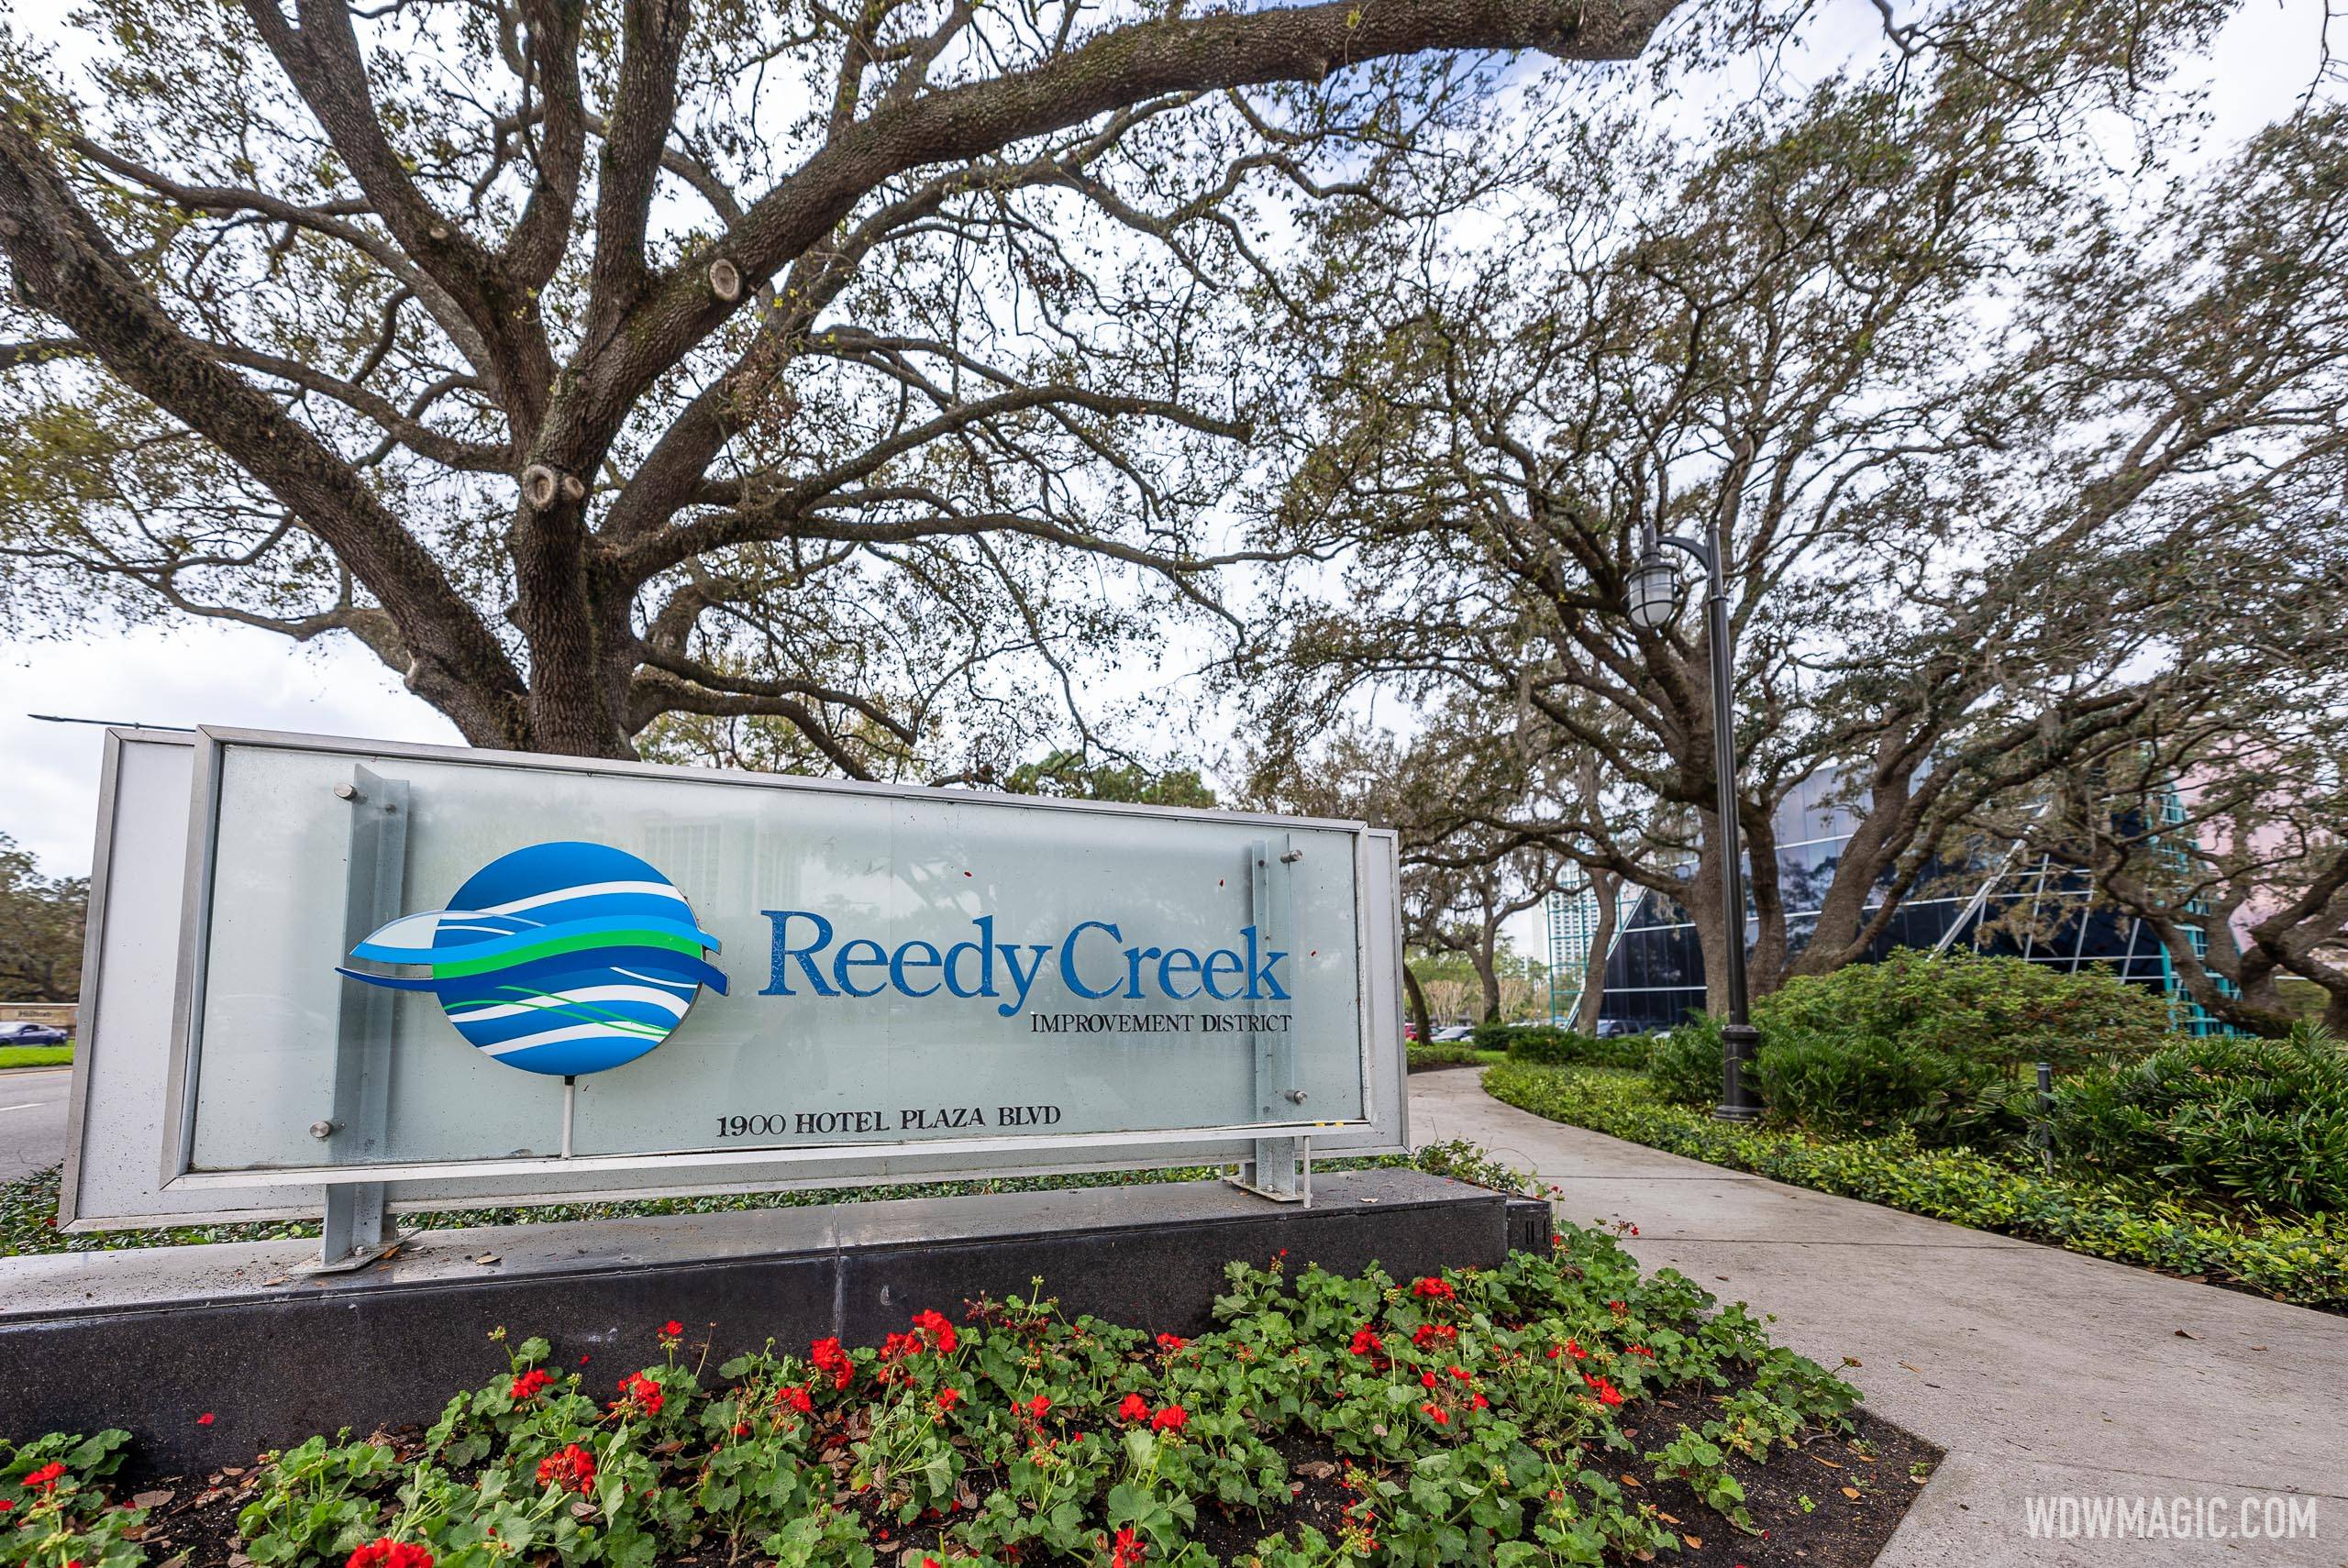 Florida Governor Ron DeSantis spoke today at Reedy Creek HQ near Disney Springs at Walt Disney World